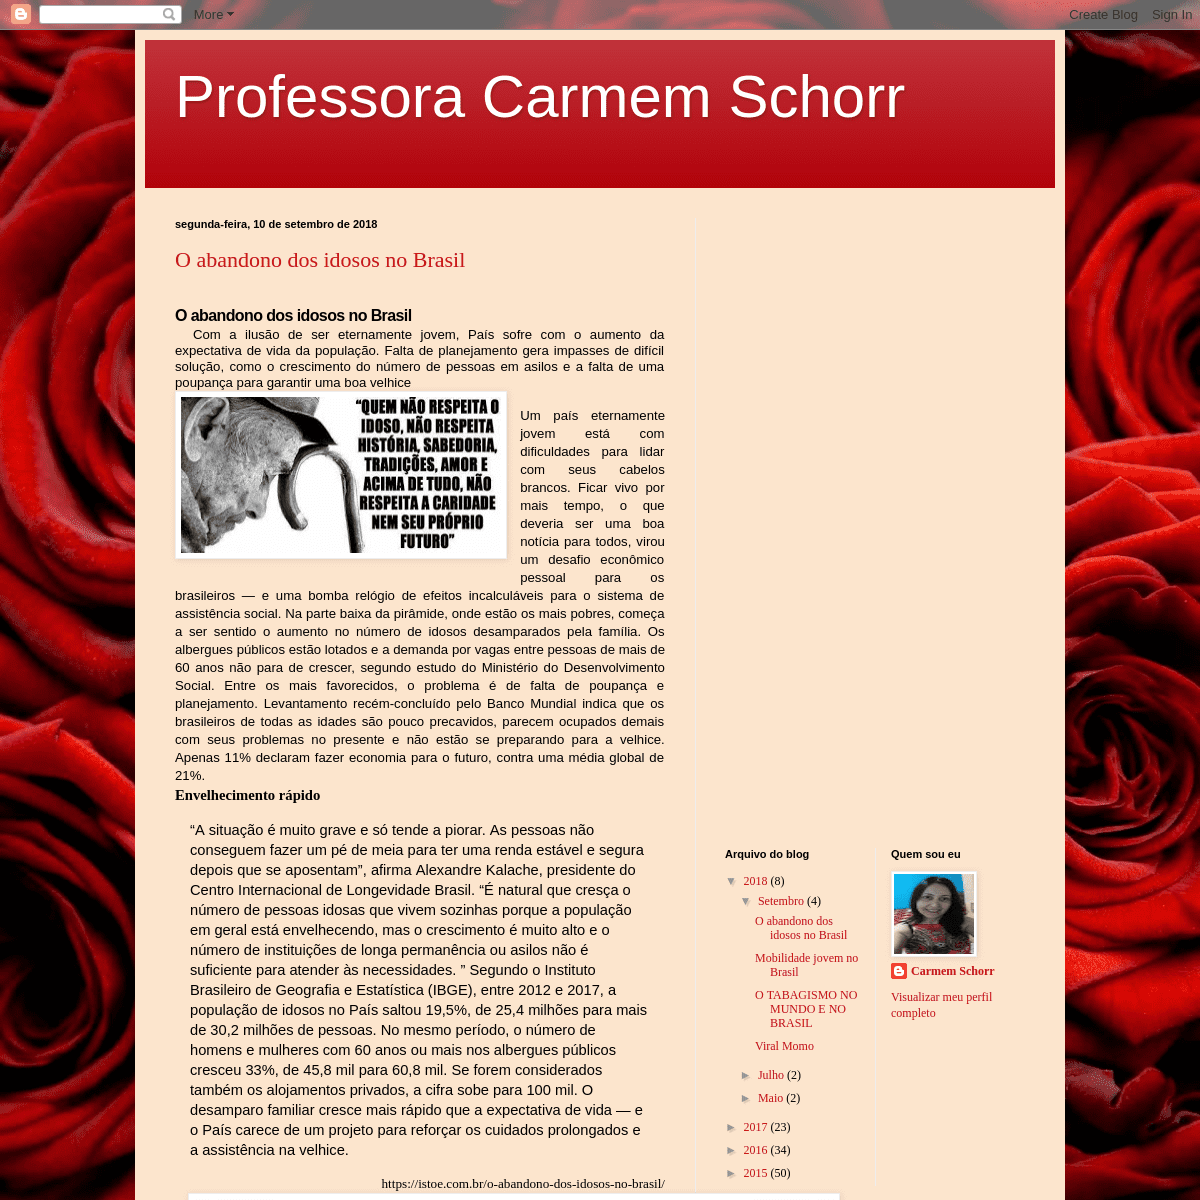 A complete backup of professoracarmemschorr.blogspot.com